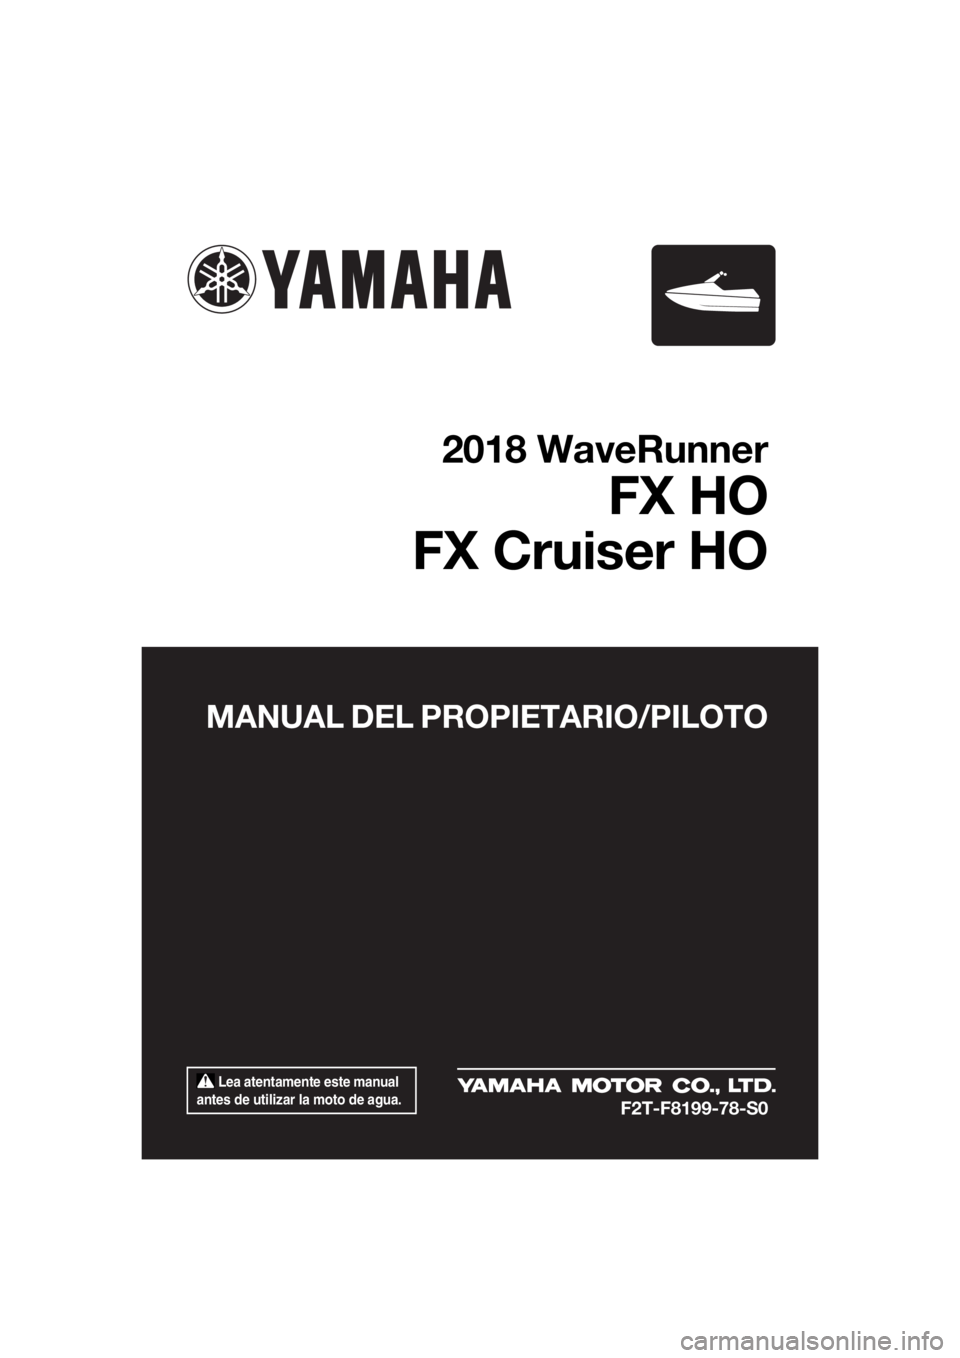 YAMAHA FX HO CRUISER 2018  Manuale de Empleo (in Spanish)  Lea atentamente este manual 
antes de utilizar la moto de agua.
MANUAL DEL PROPIETARIO/PILOTO
2018 WaveRunner
FX HO
FX Cruiser HO
F2T-F8199-78-S0
UF2T78S0.book  Page 1  Wednesday, July 12, 2017  1:28